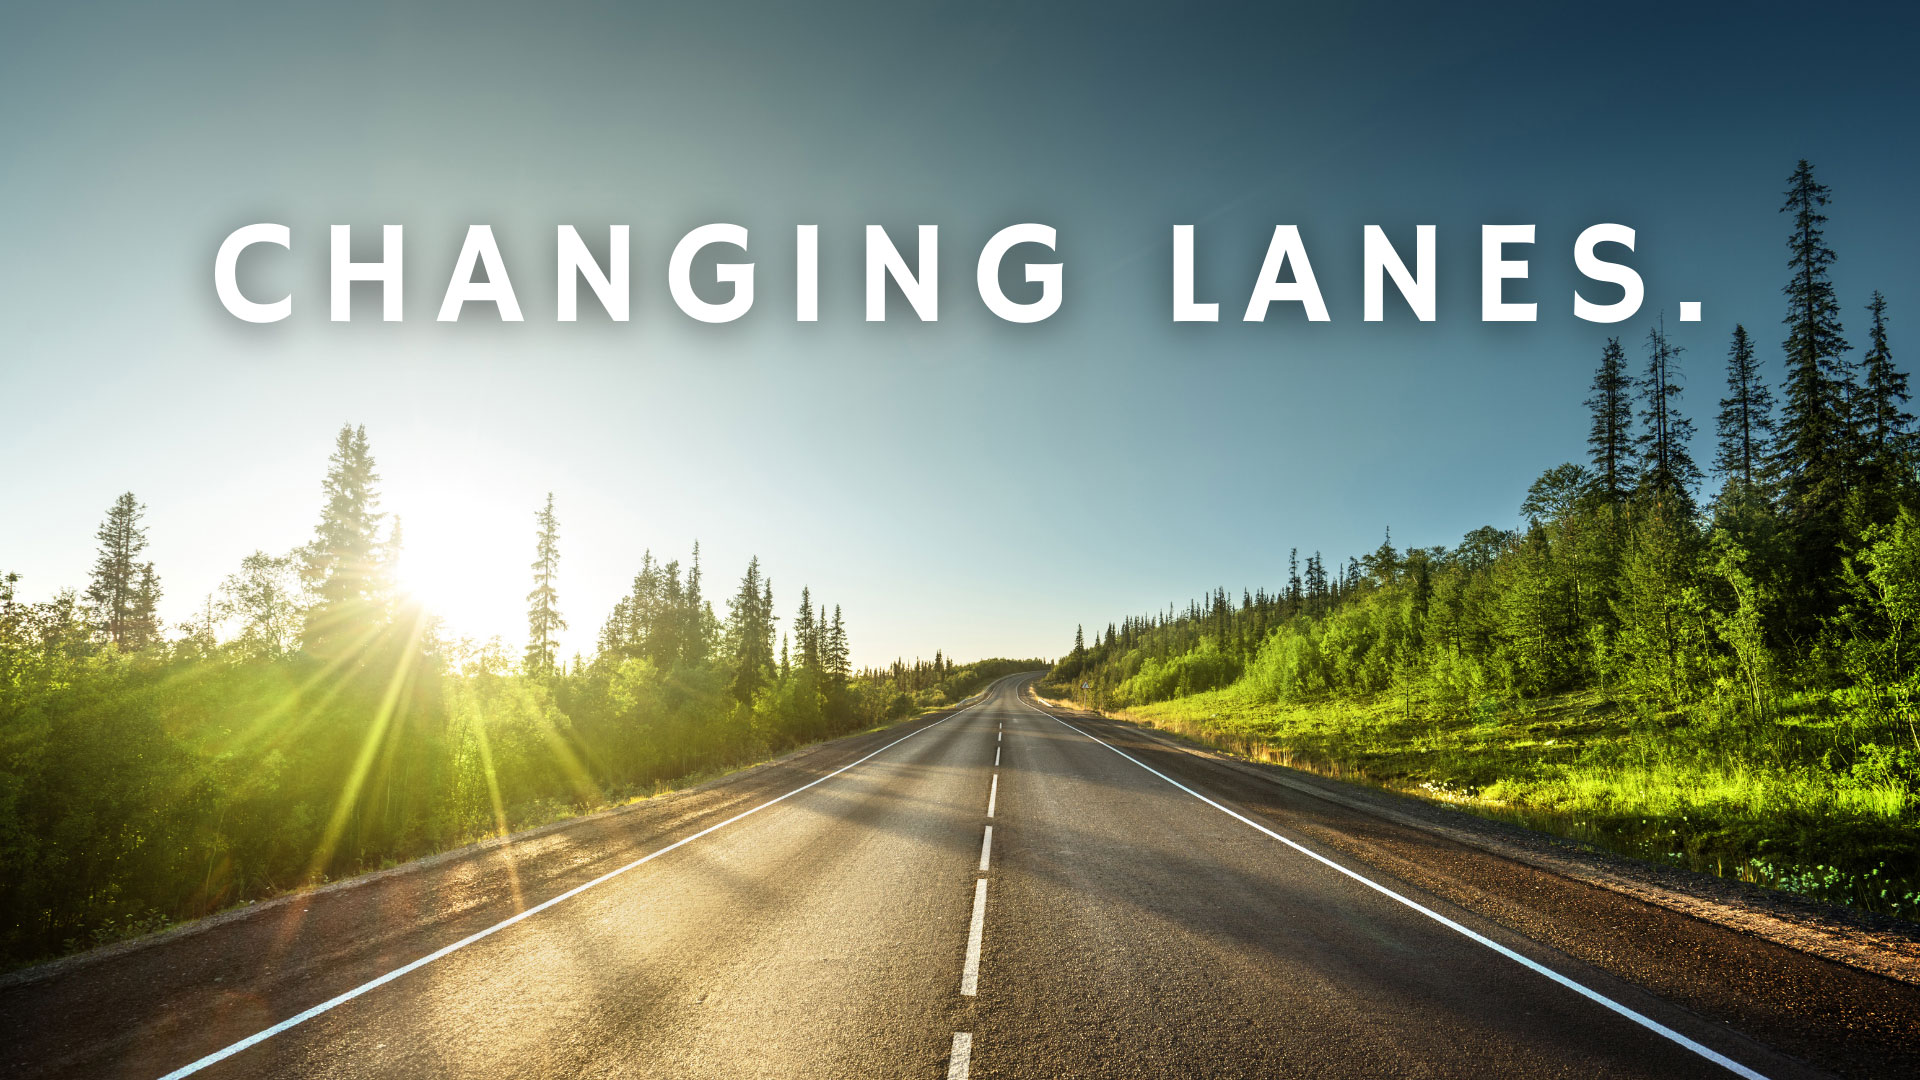 "CHANGING LANES." Message